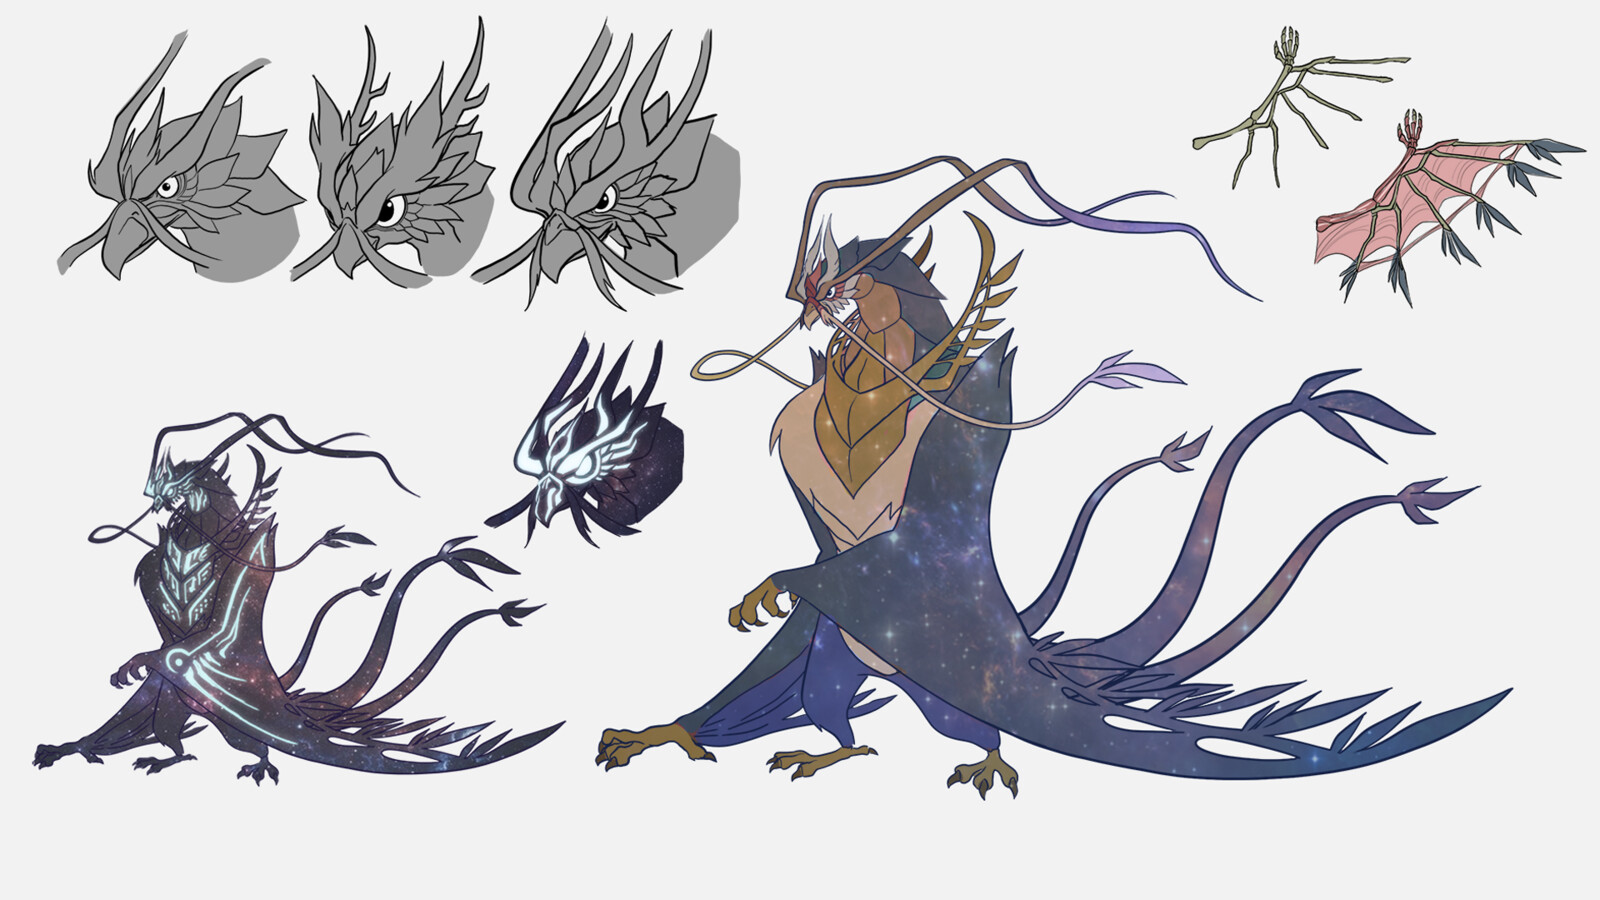 Talon's (totem's deity &amp; Edan's summoned creature) detail exploration page